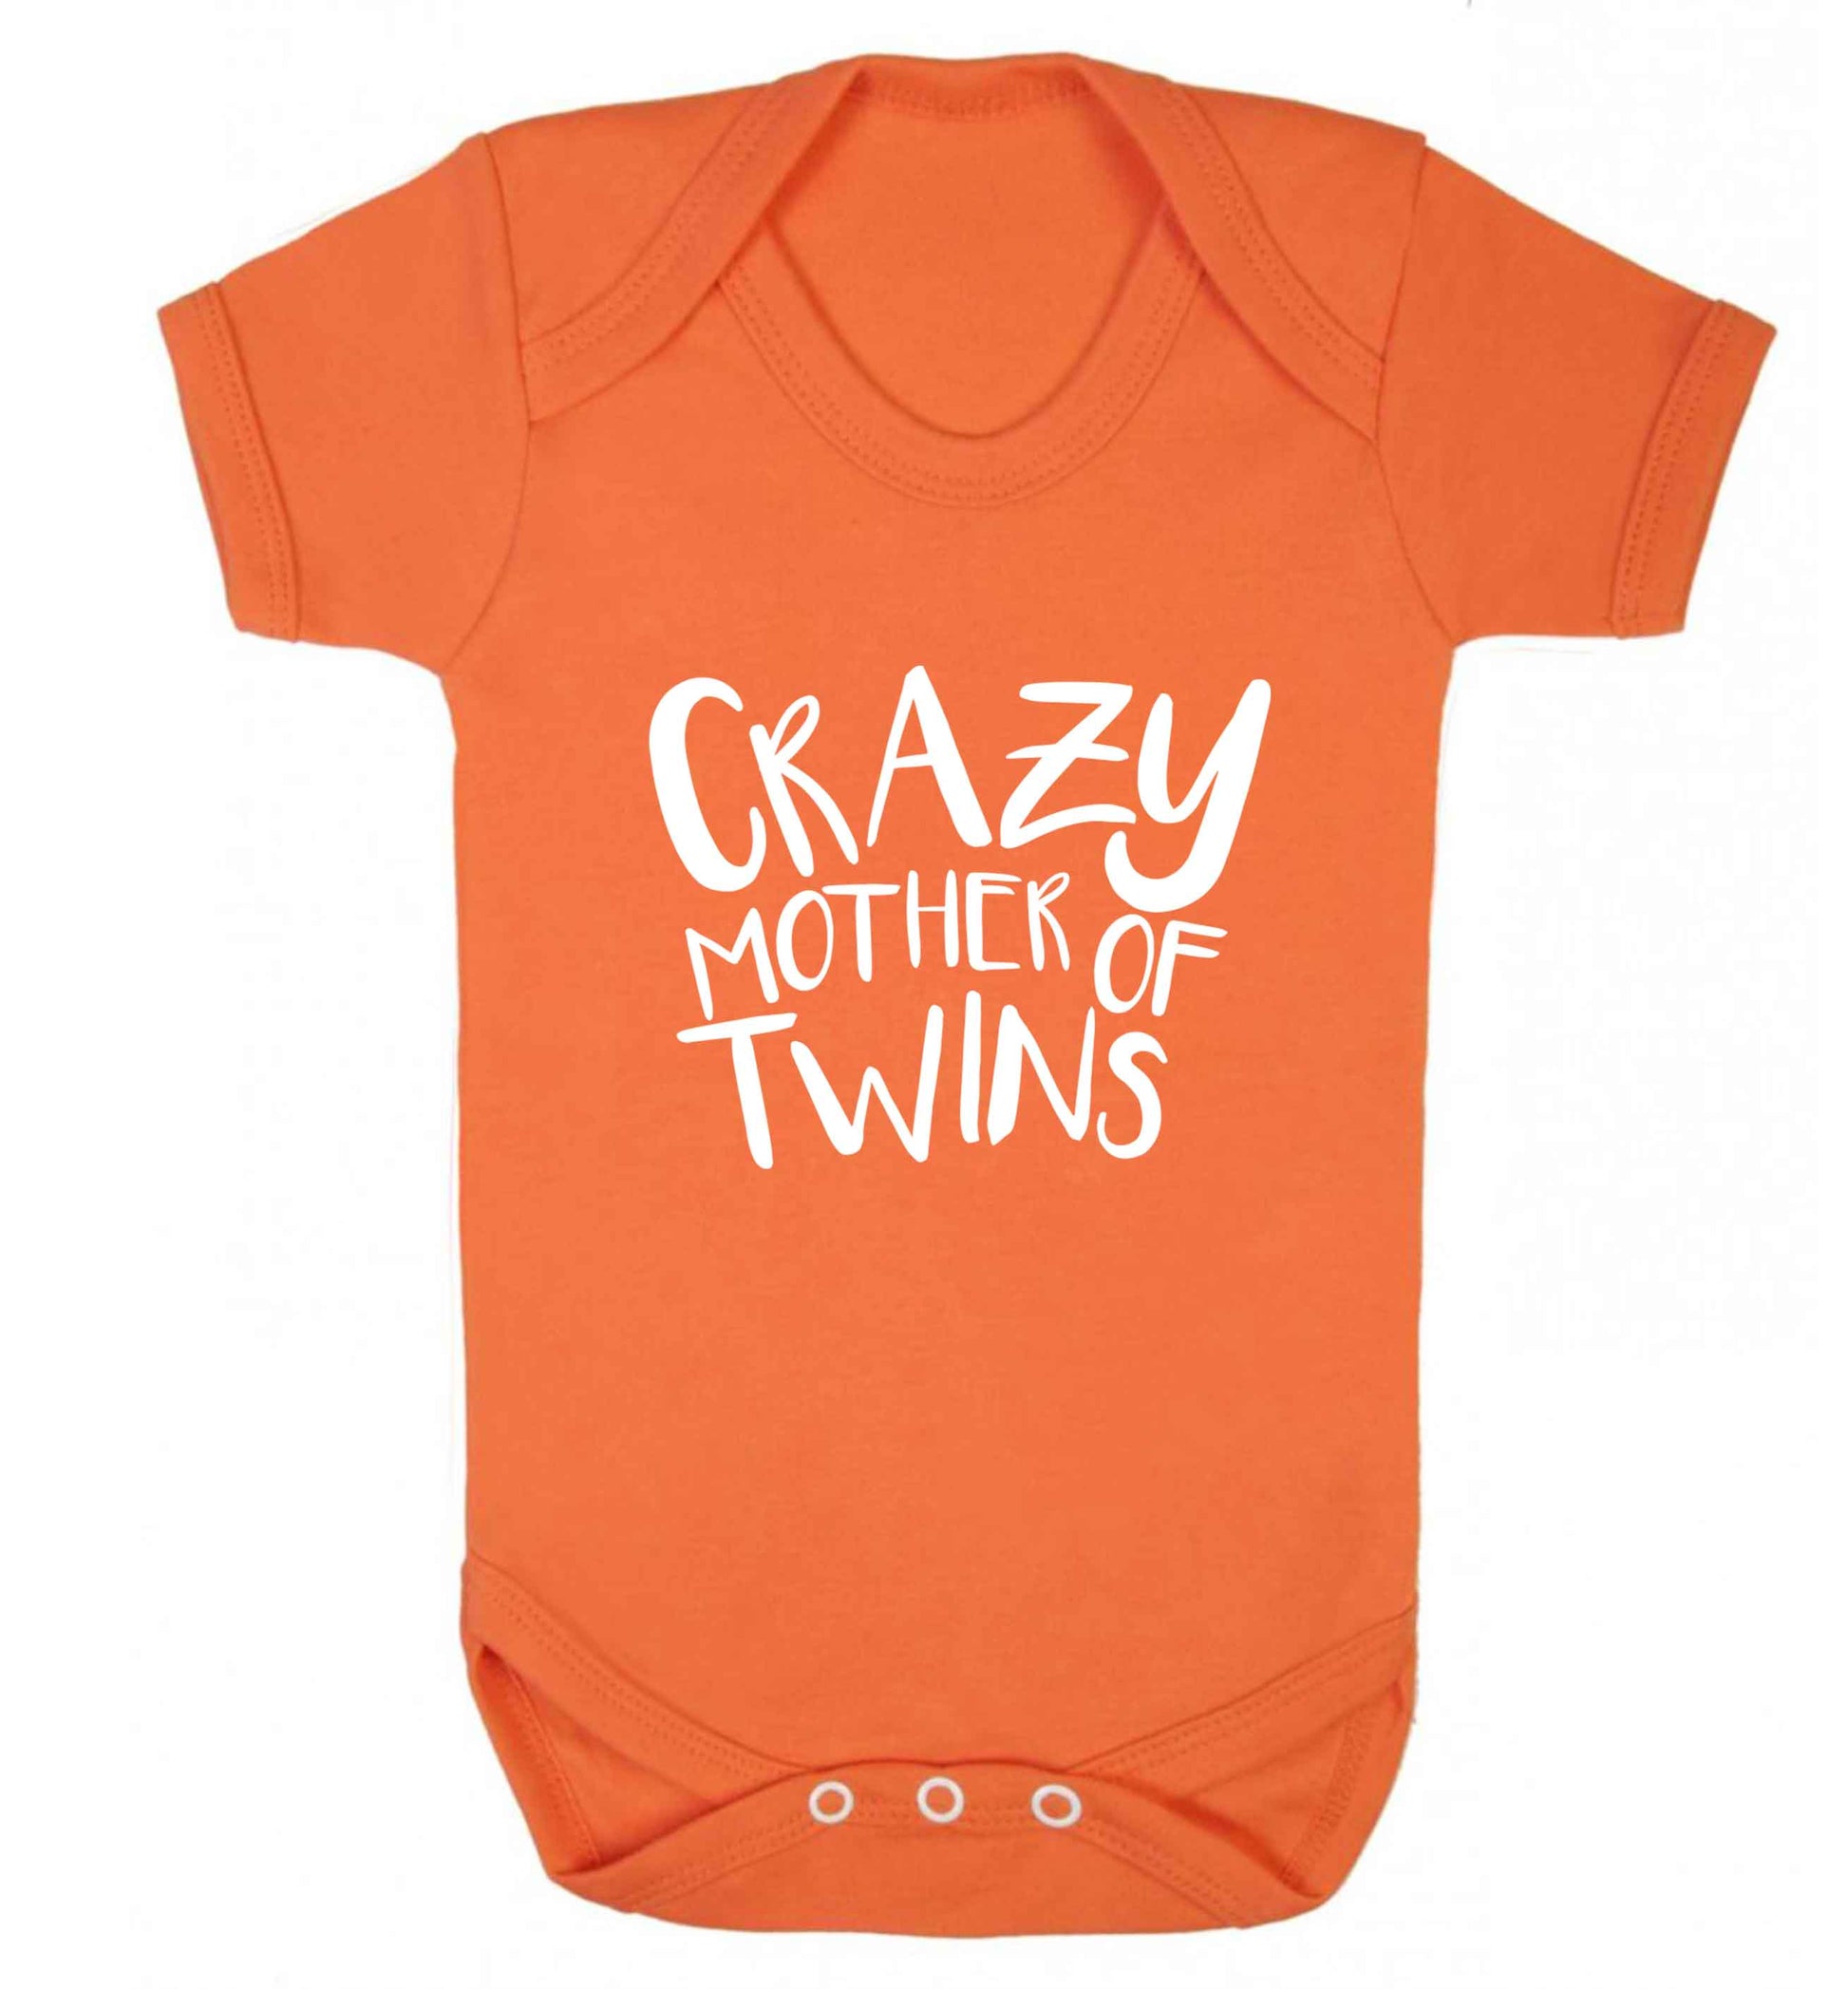 Crazy mother of twins baby vest orange 18-24 months